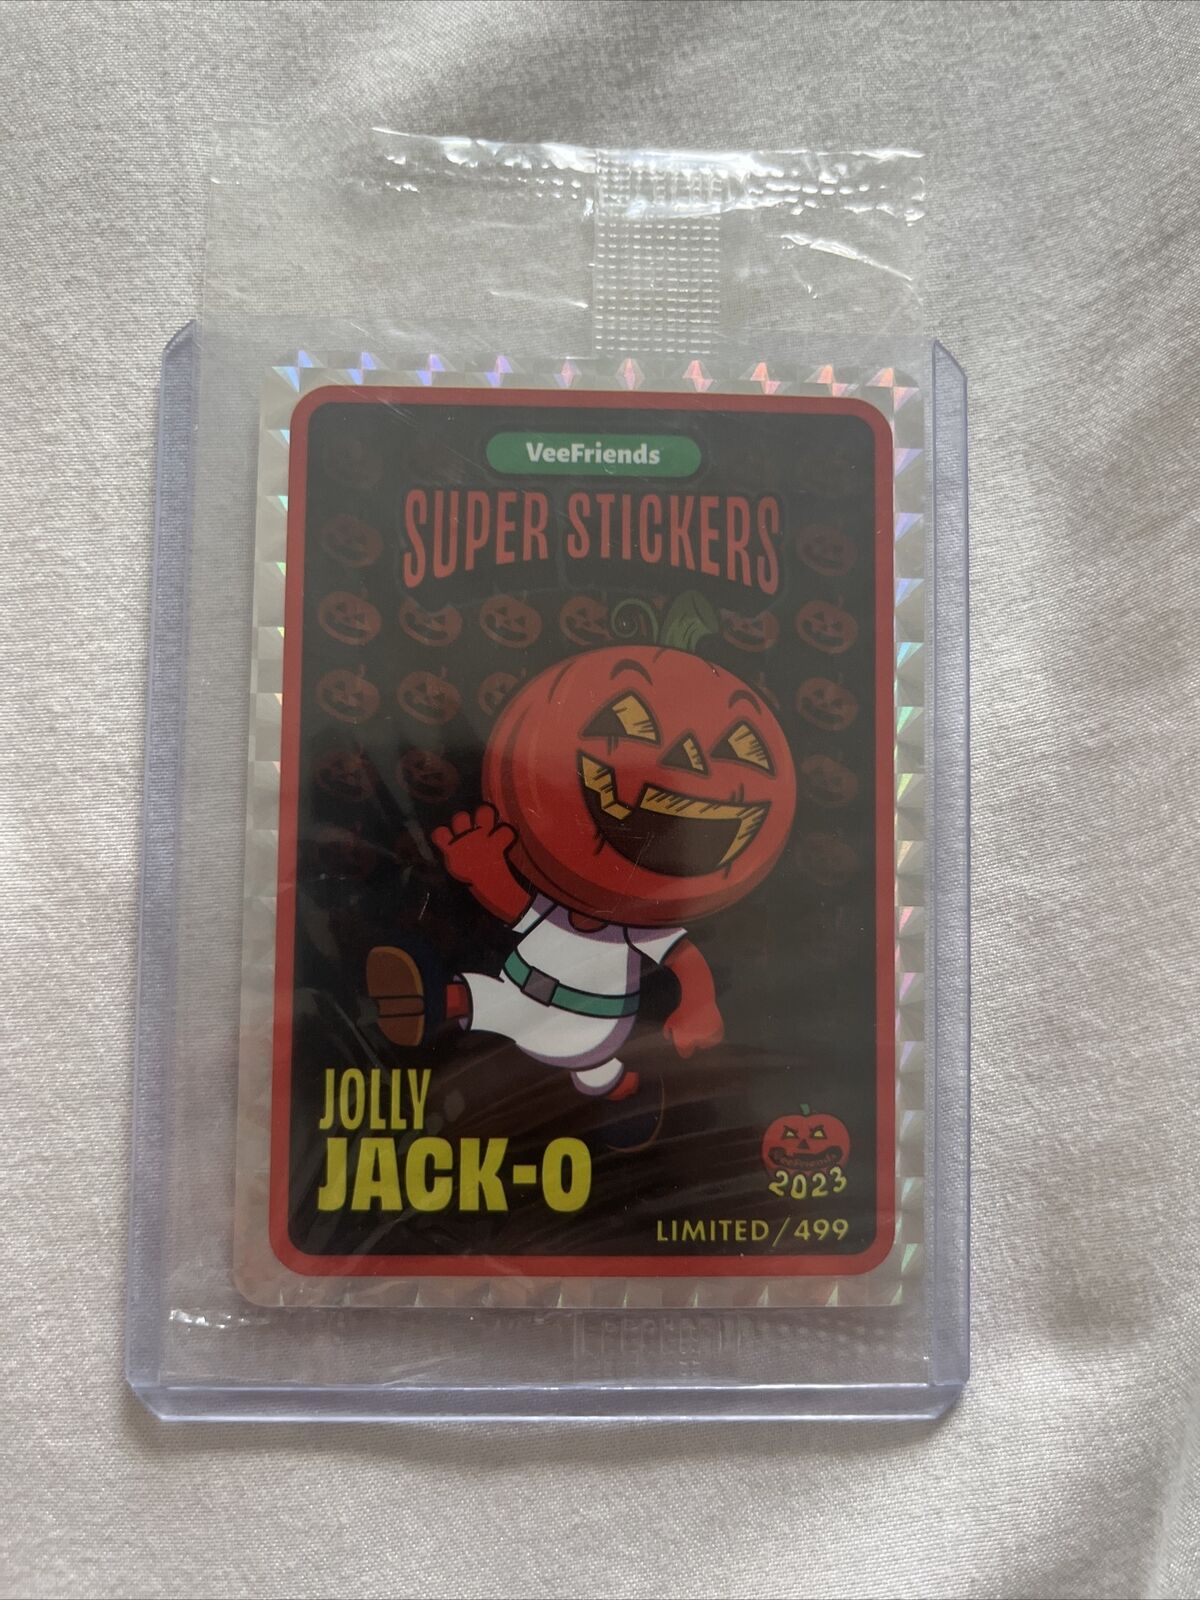 VeeFriends Halloween - Spooktacular - Jolly Jack-O - Super Sticker /499